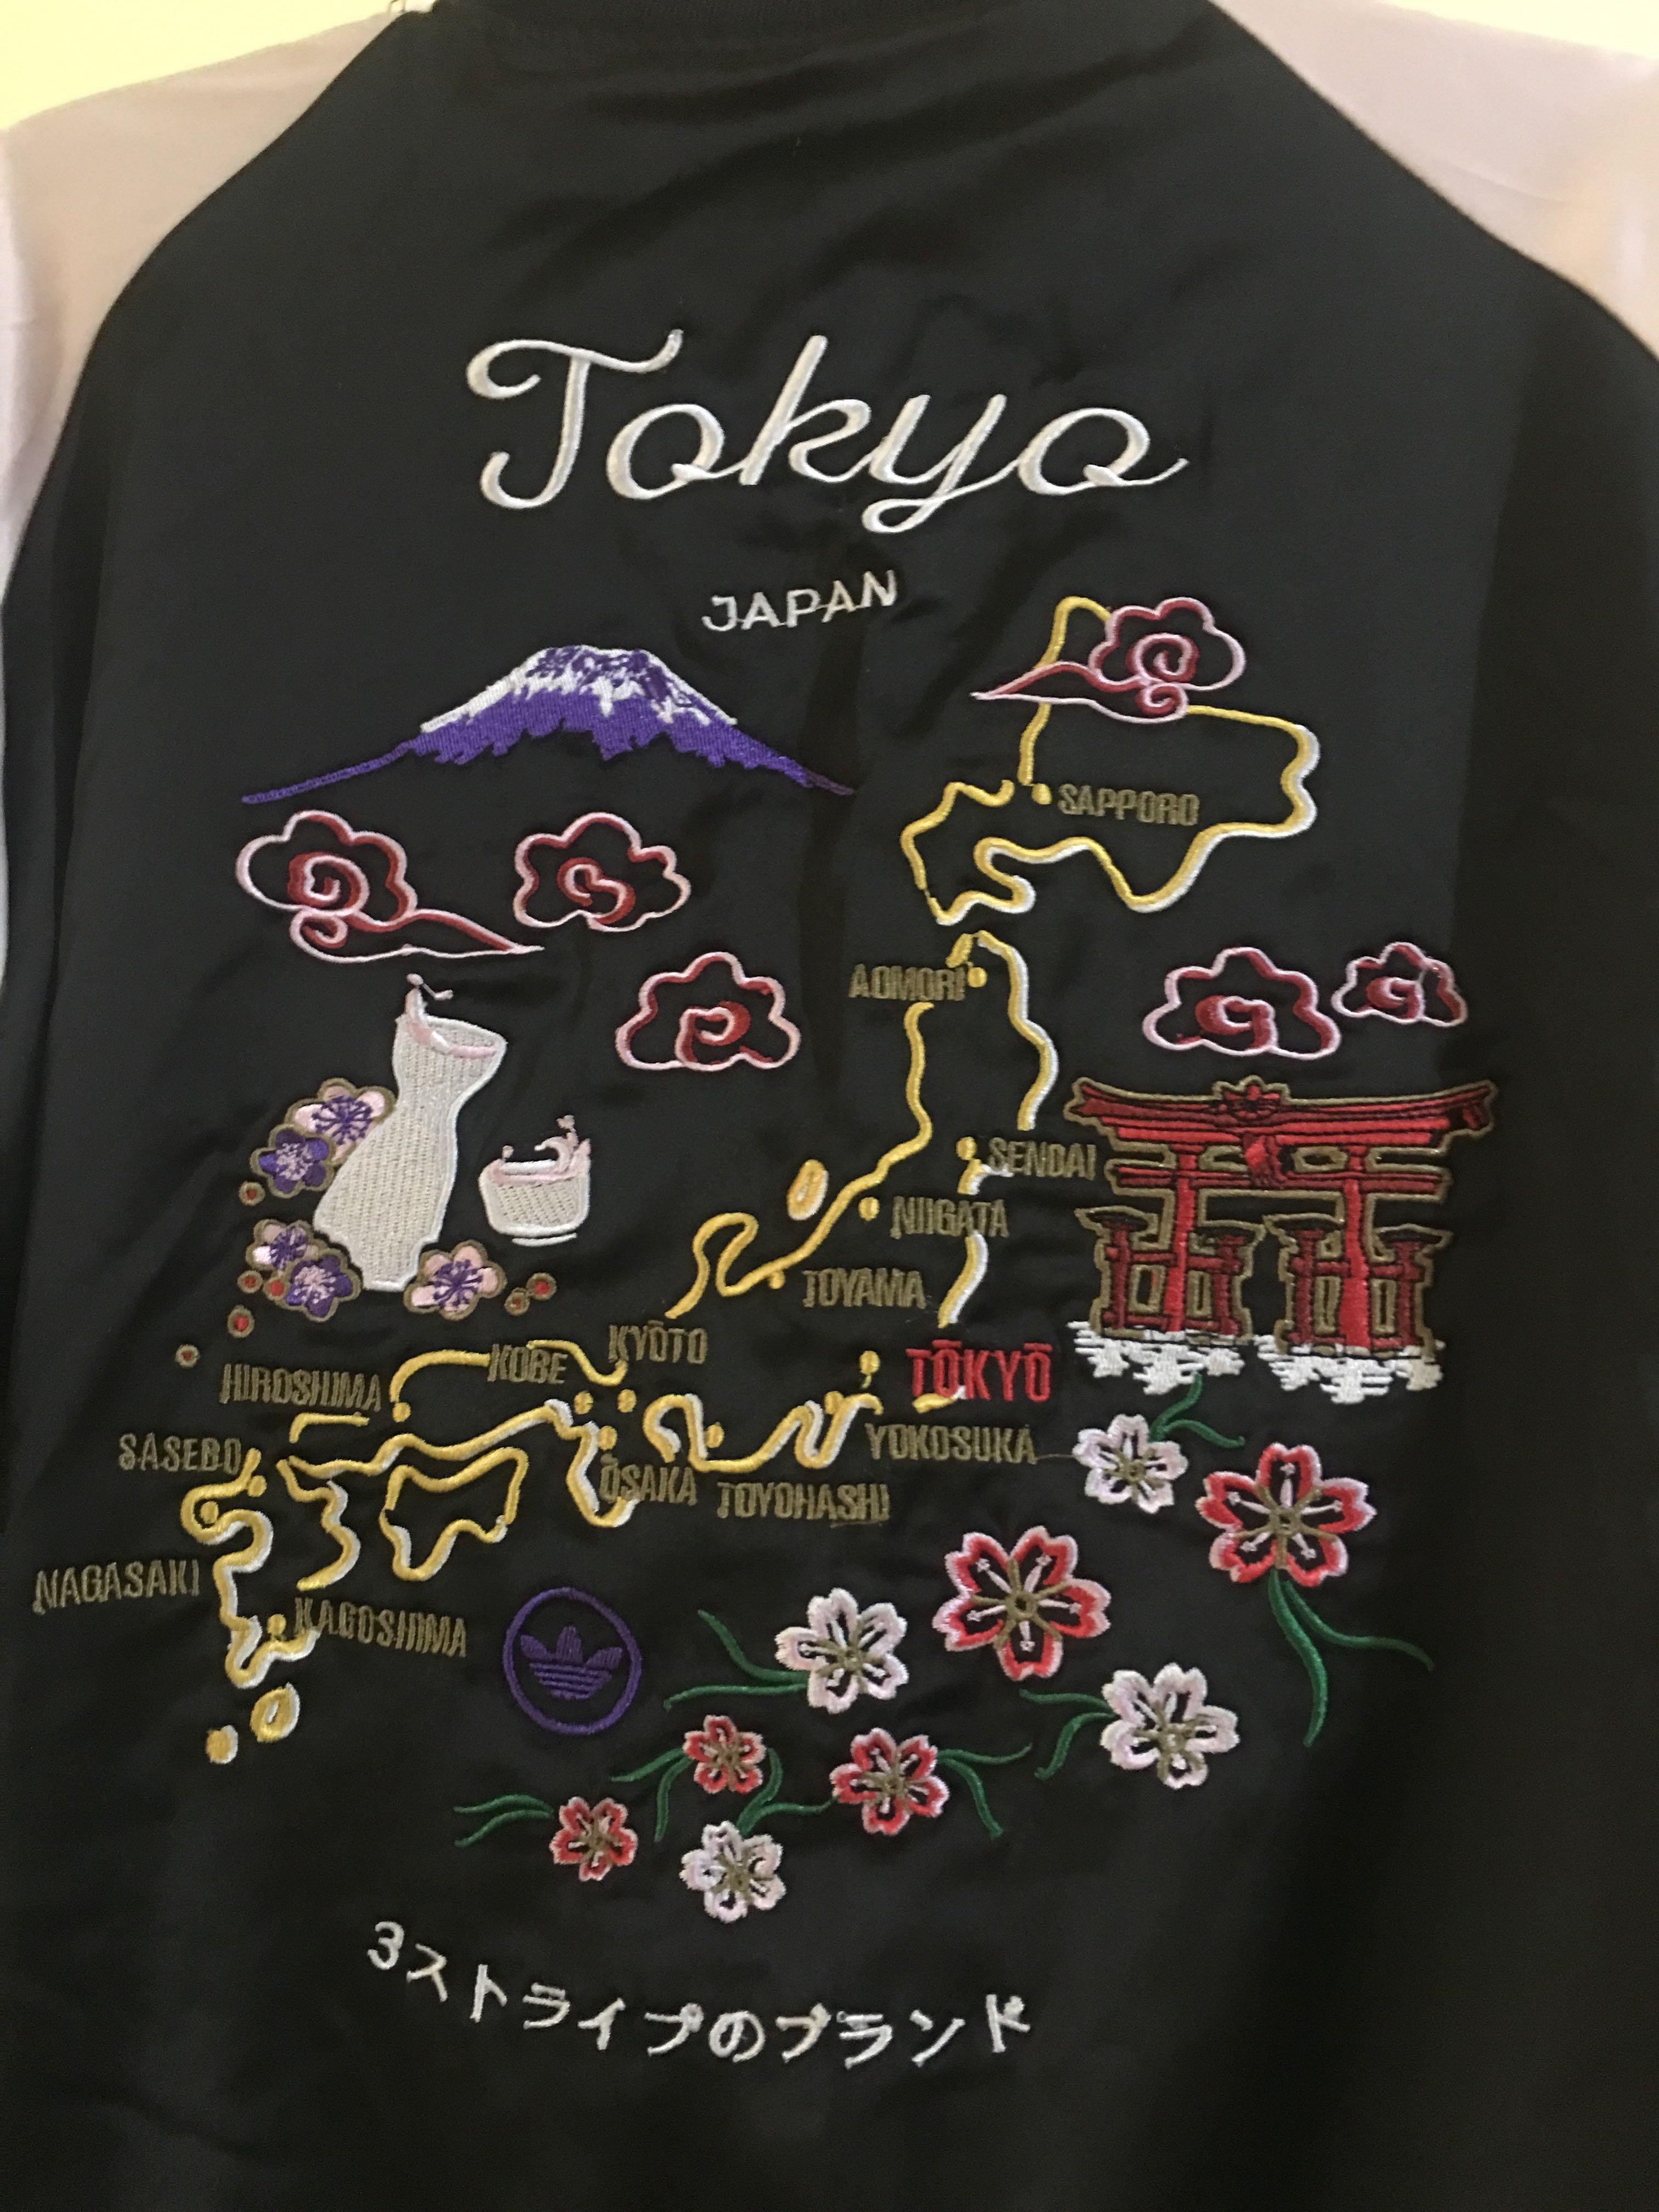 rita ora adidas tokyo jacket